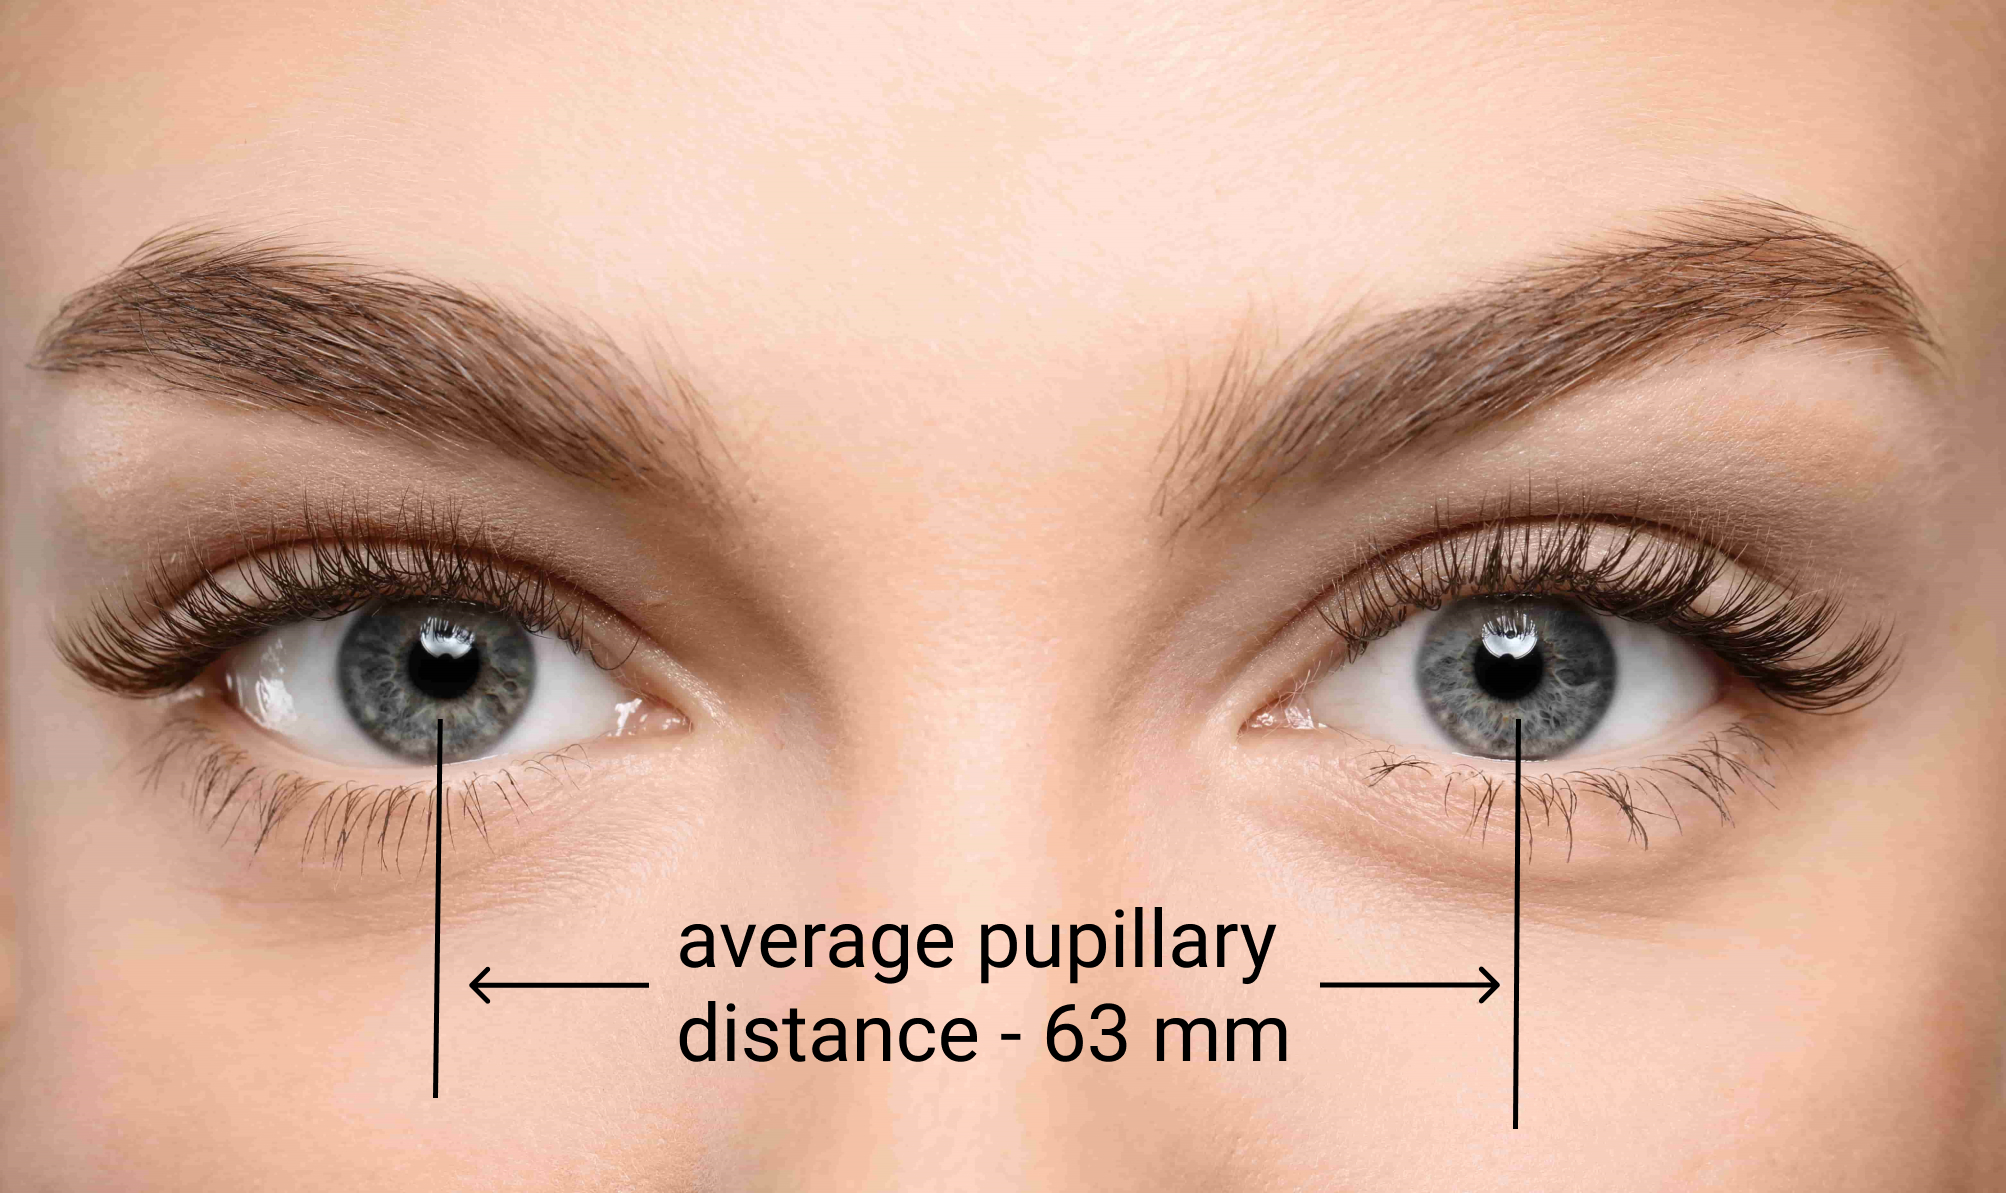 Average Pupillary Distance - 63 mm